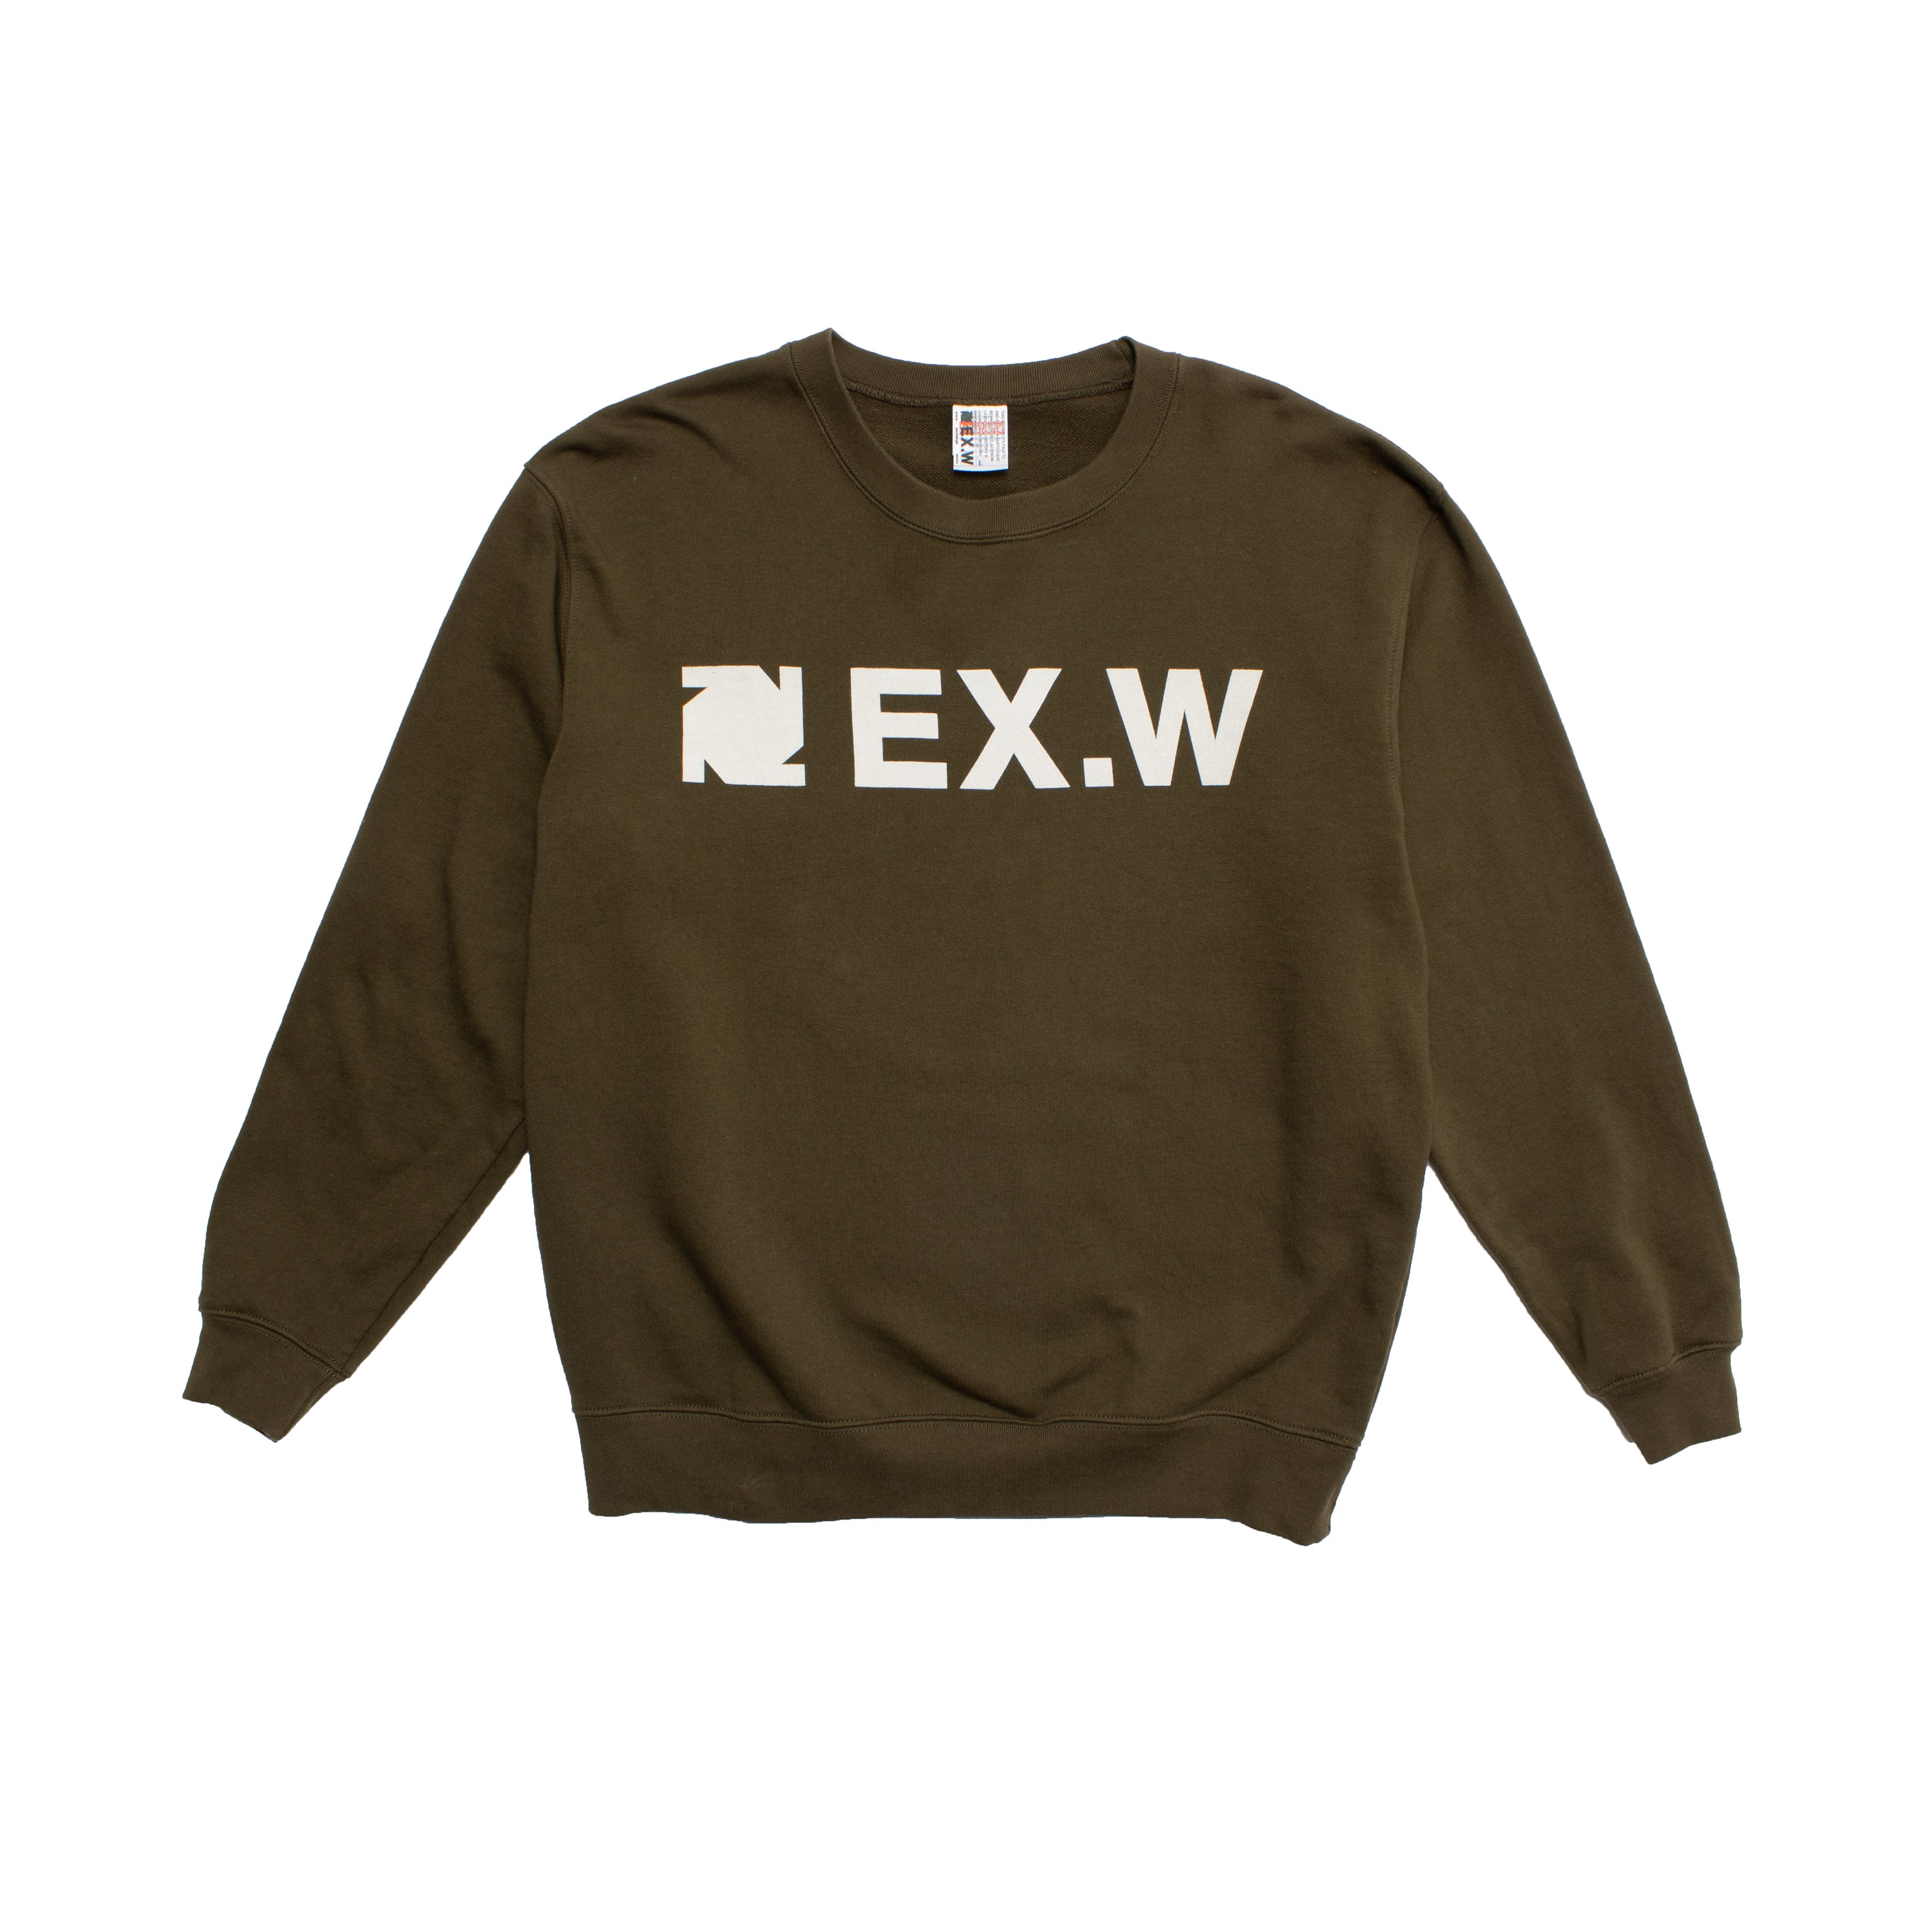 EXW - Printed Olive Crewneck x 1